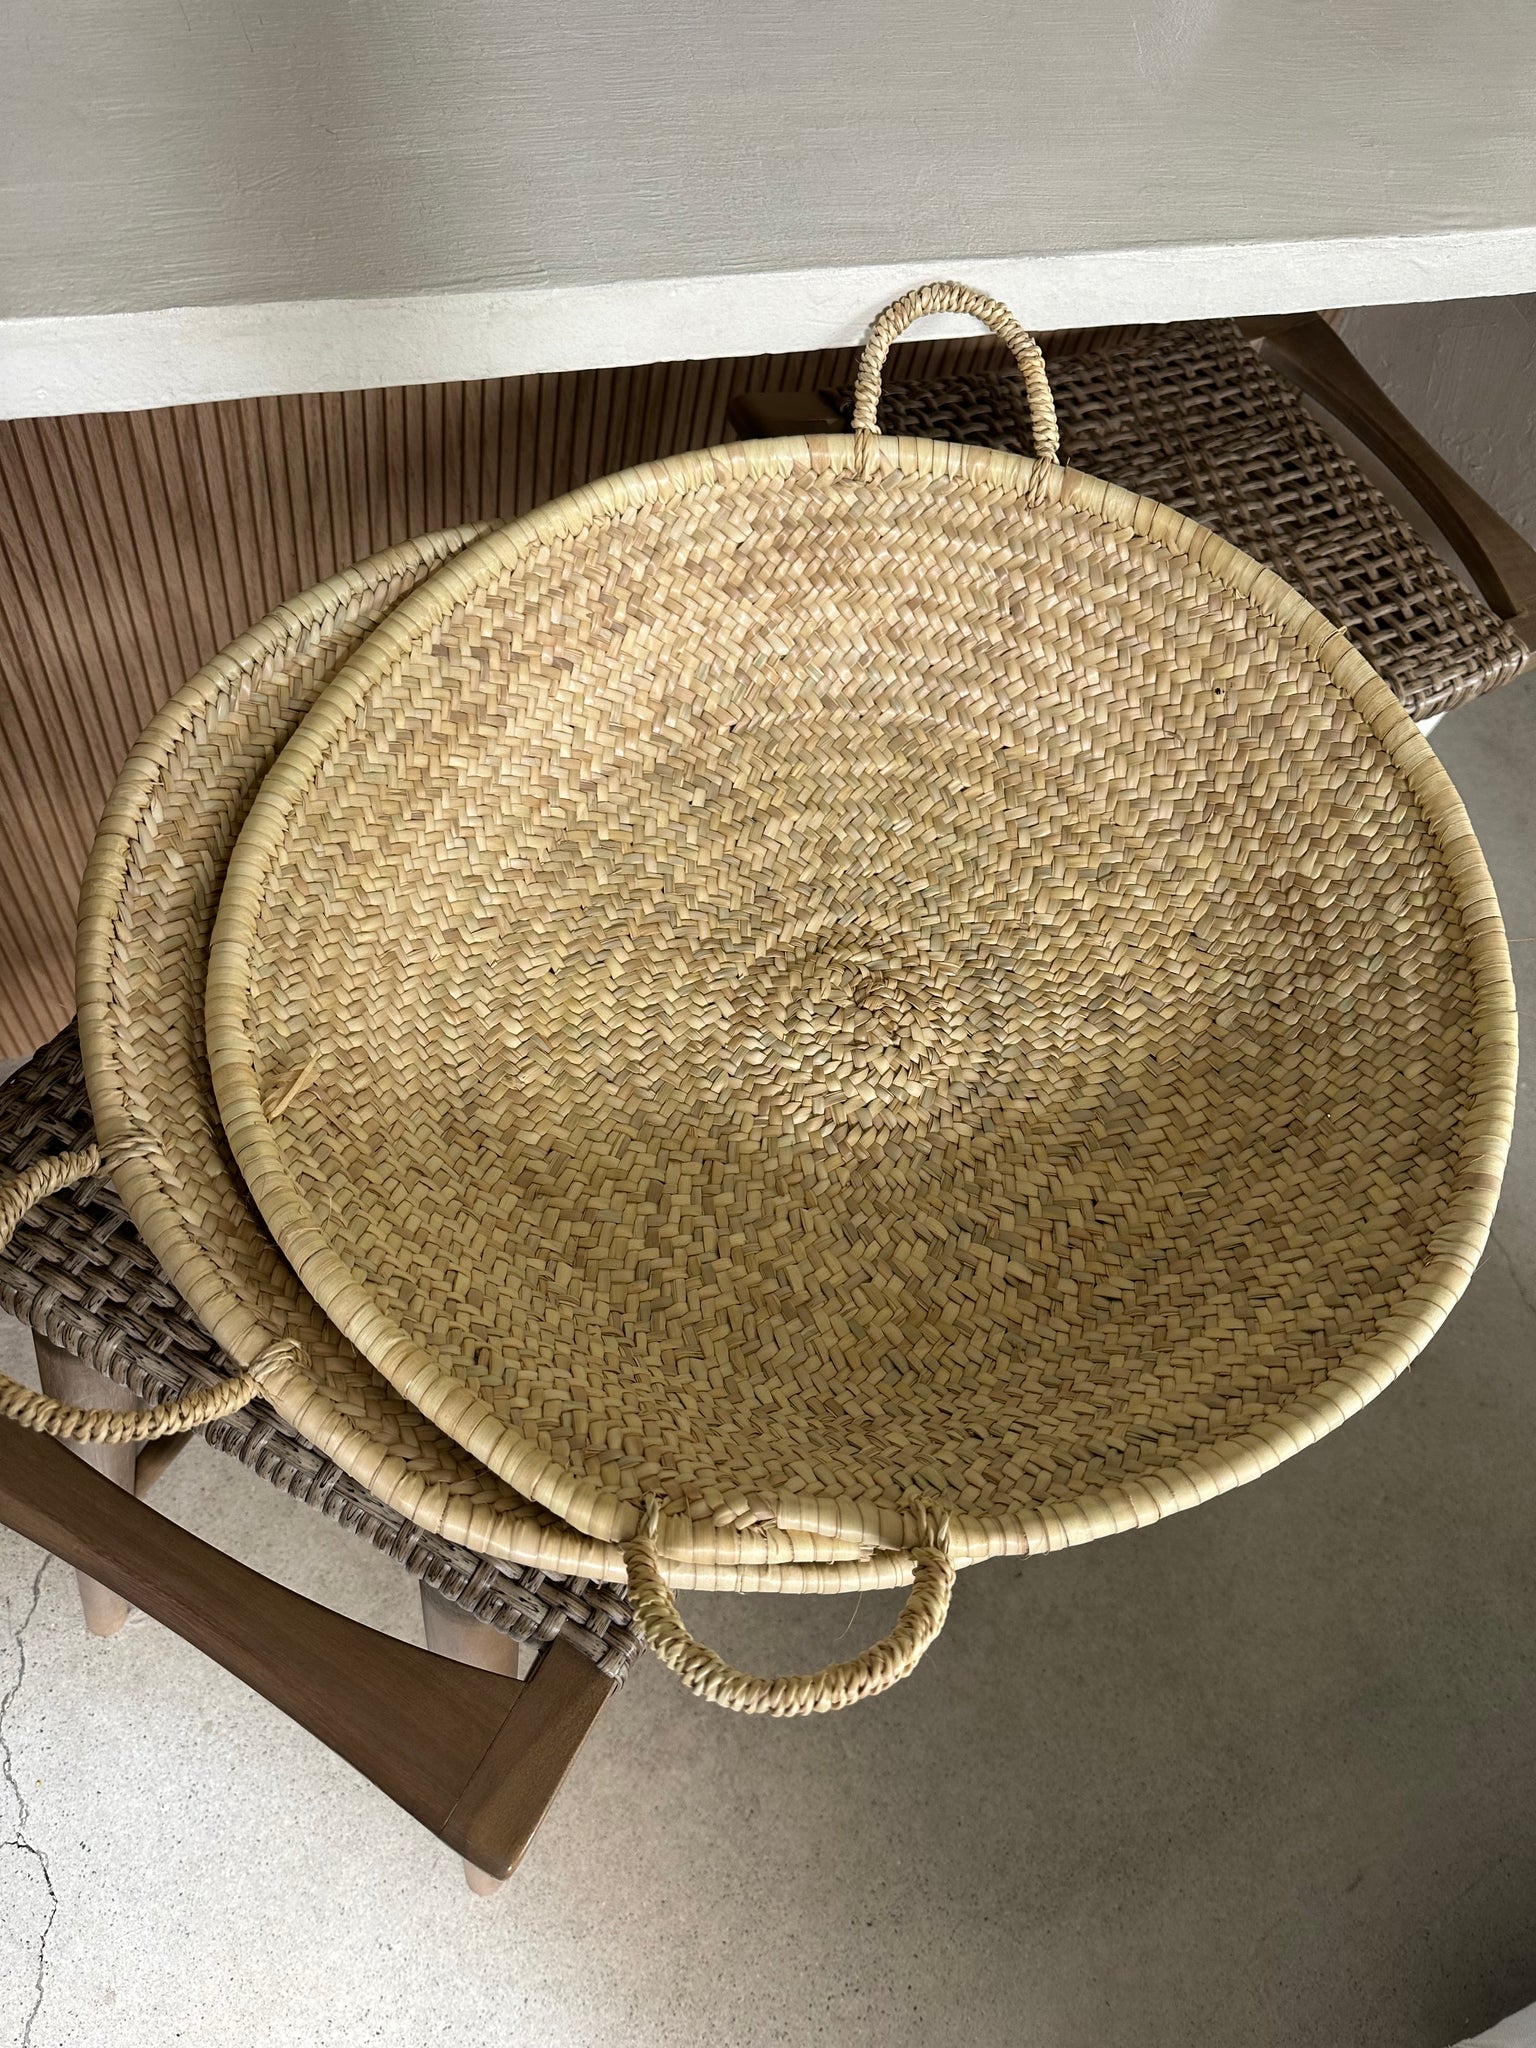 woven plate basket